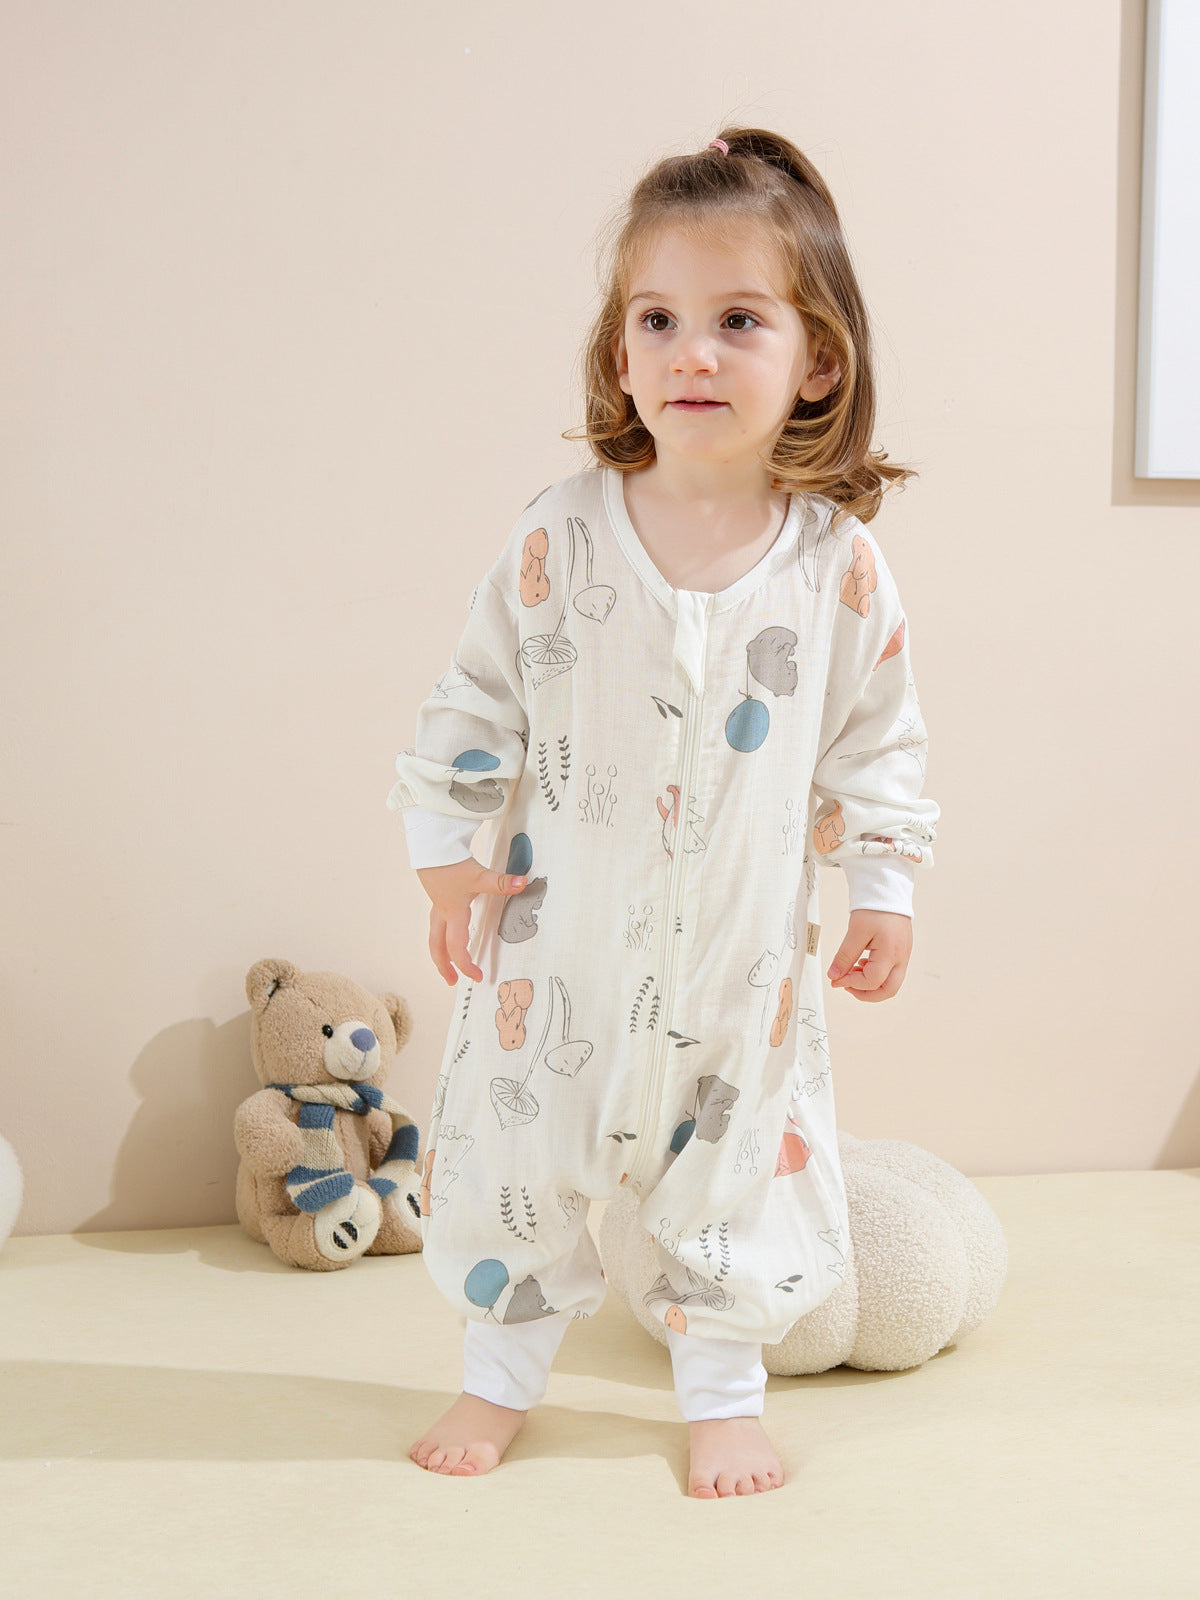 LionVII Pajamas for Children